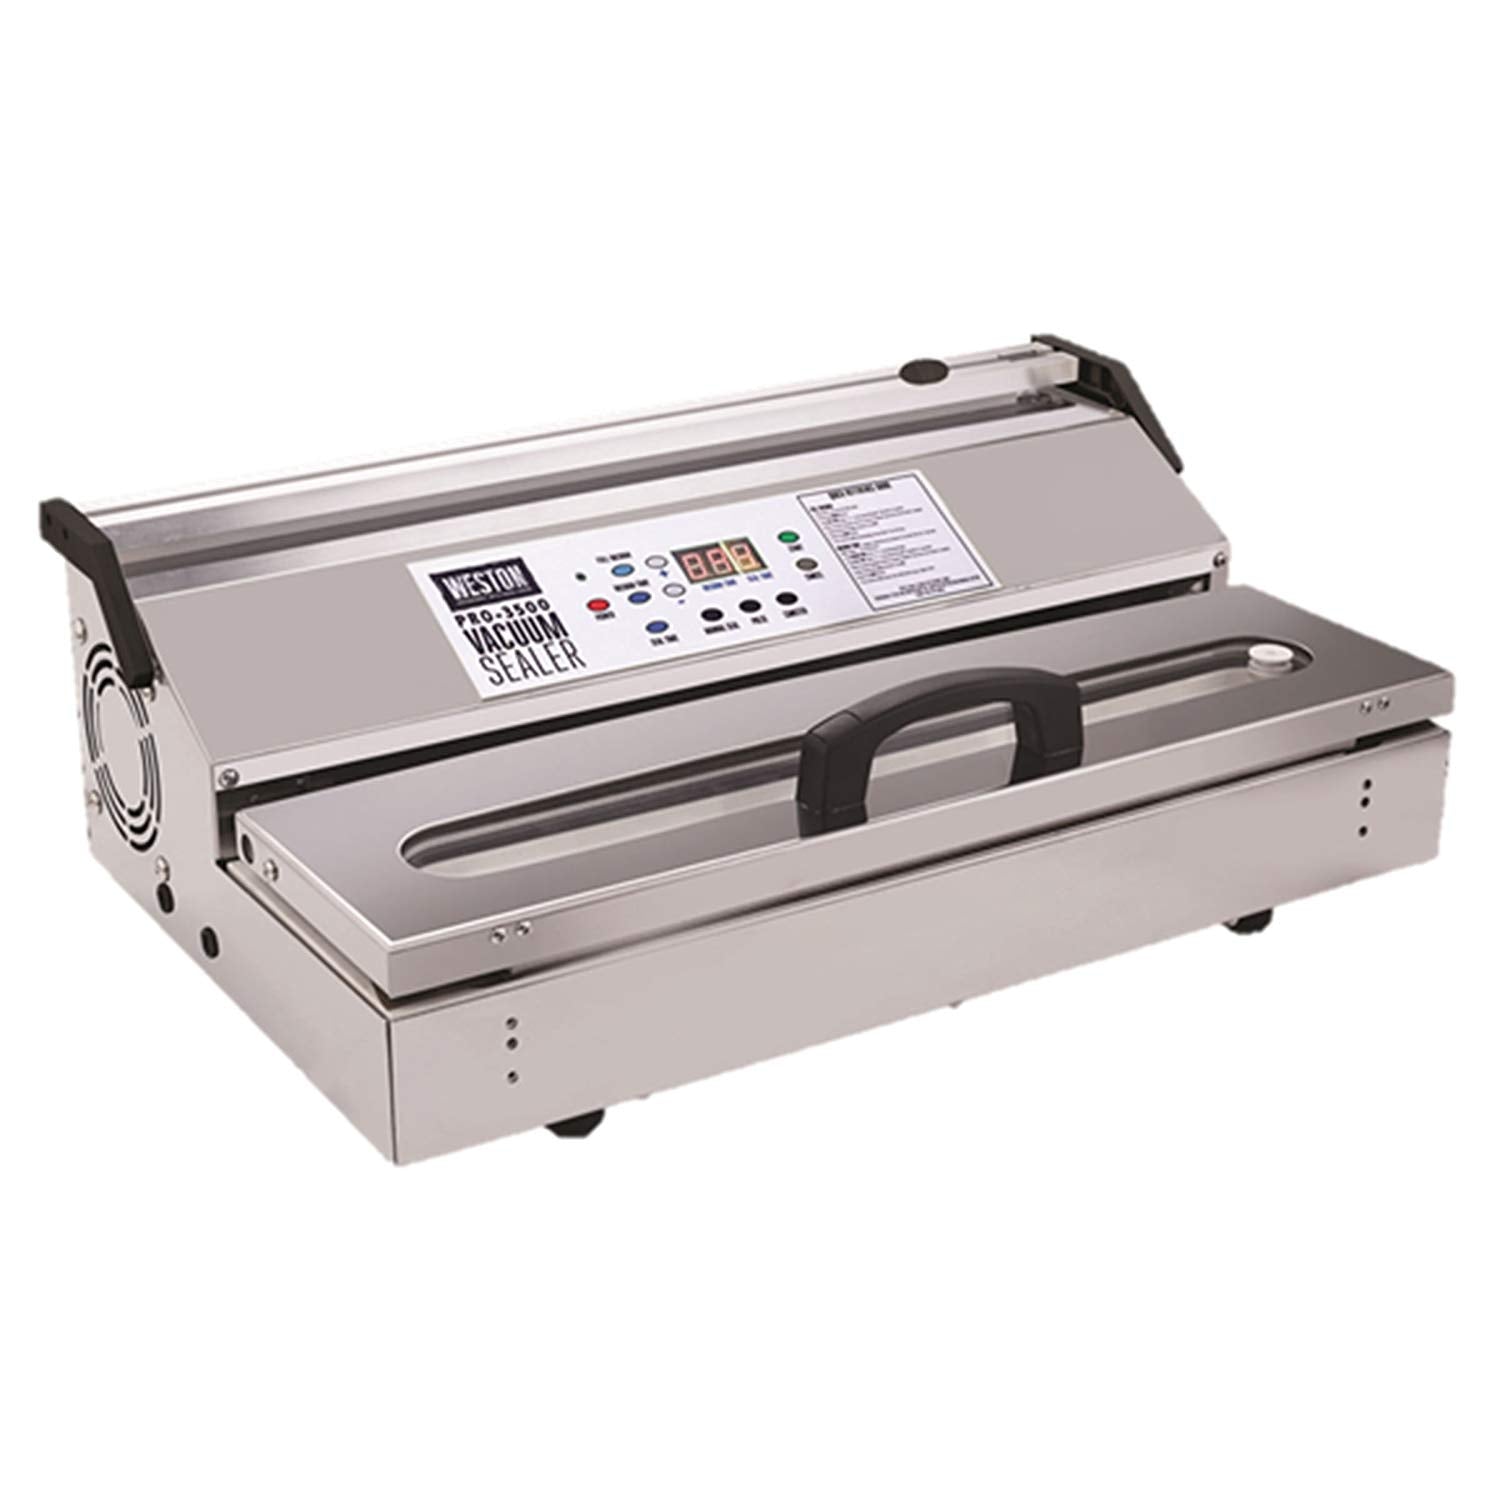 Weston Pro-1100 Vacuum Sealer Packaging Machine (11)